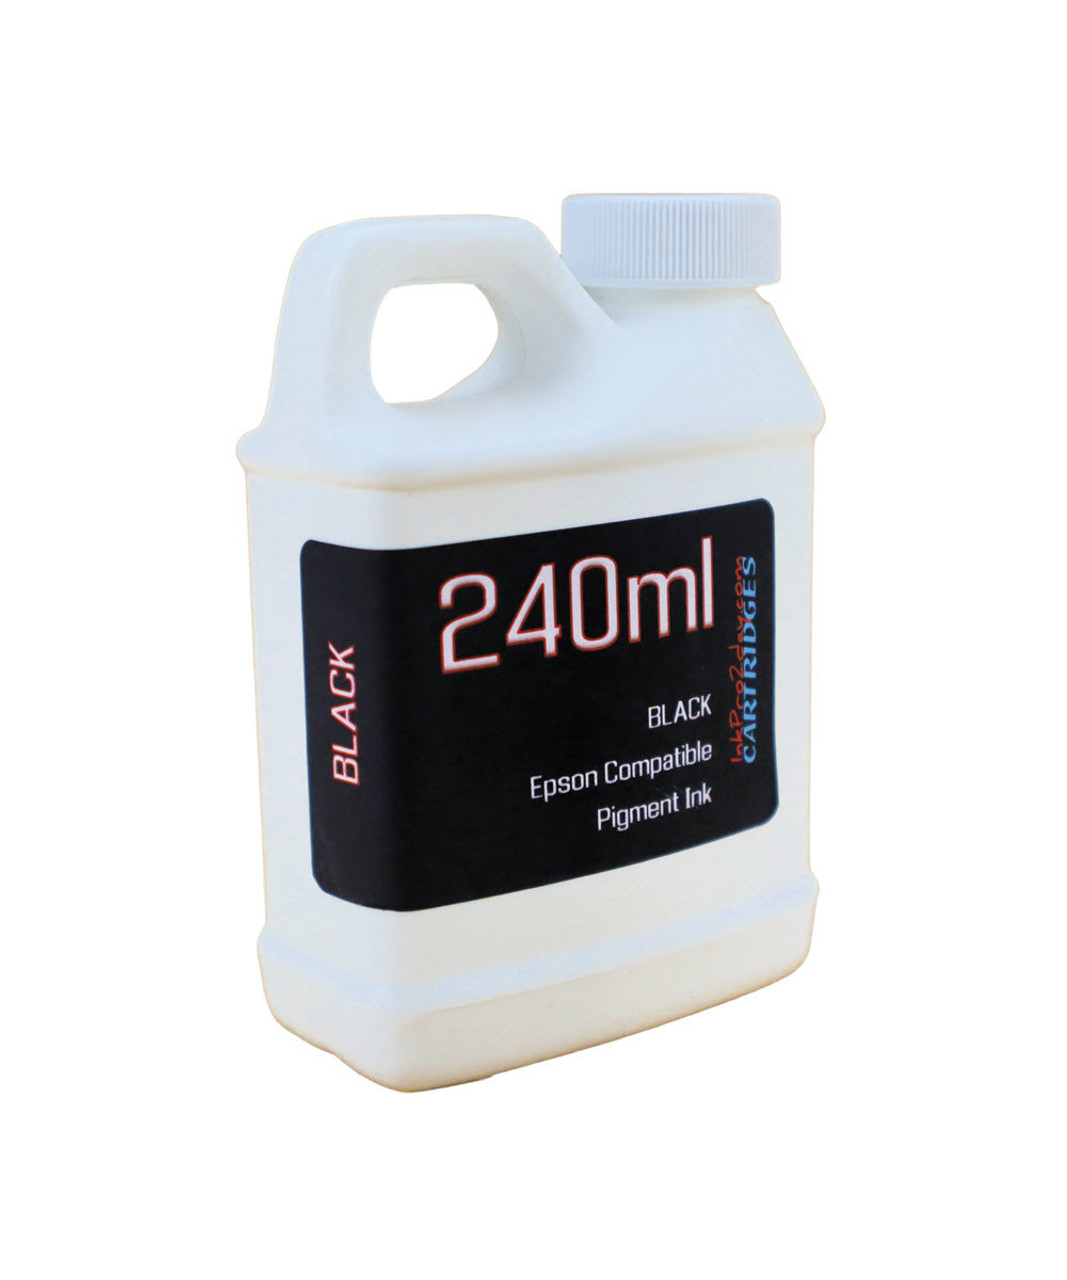 Black Pigment Ink 240ml Bottle for Epson EcoTank ET-16600 ET-16650 Printers